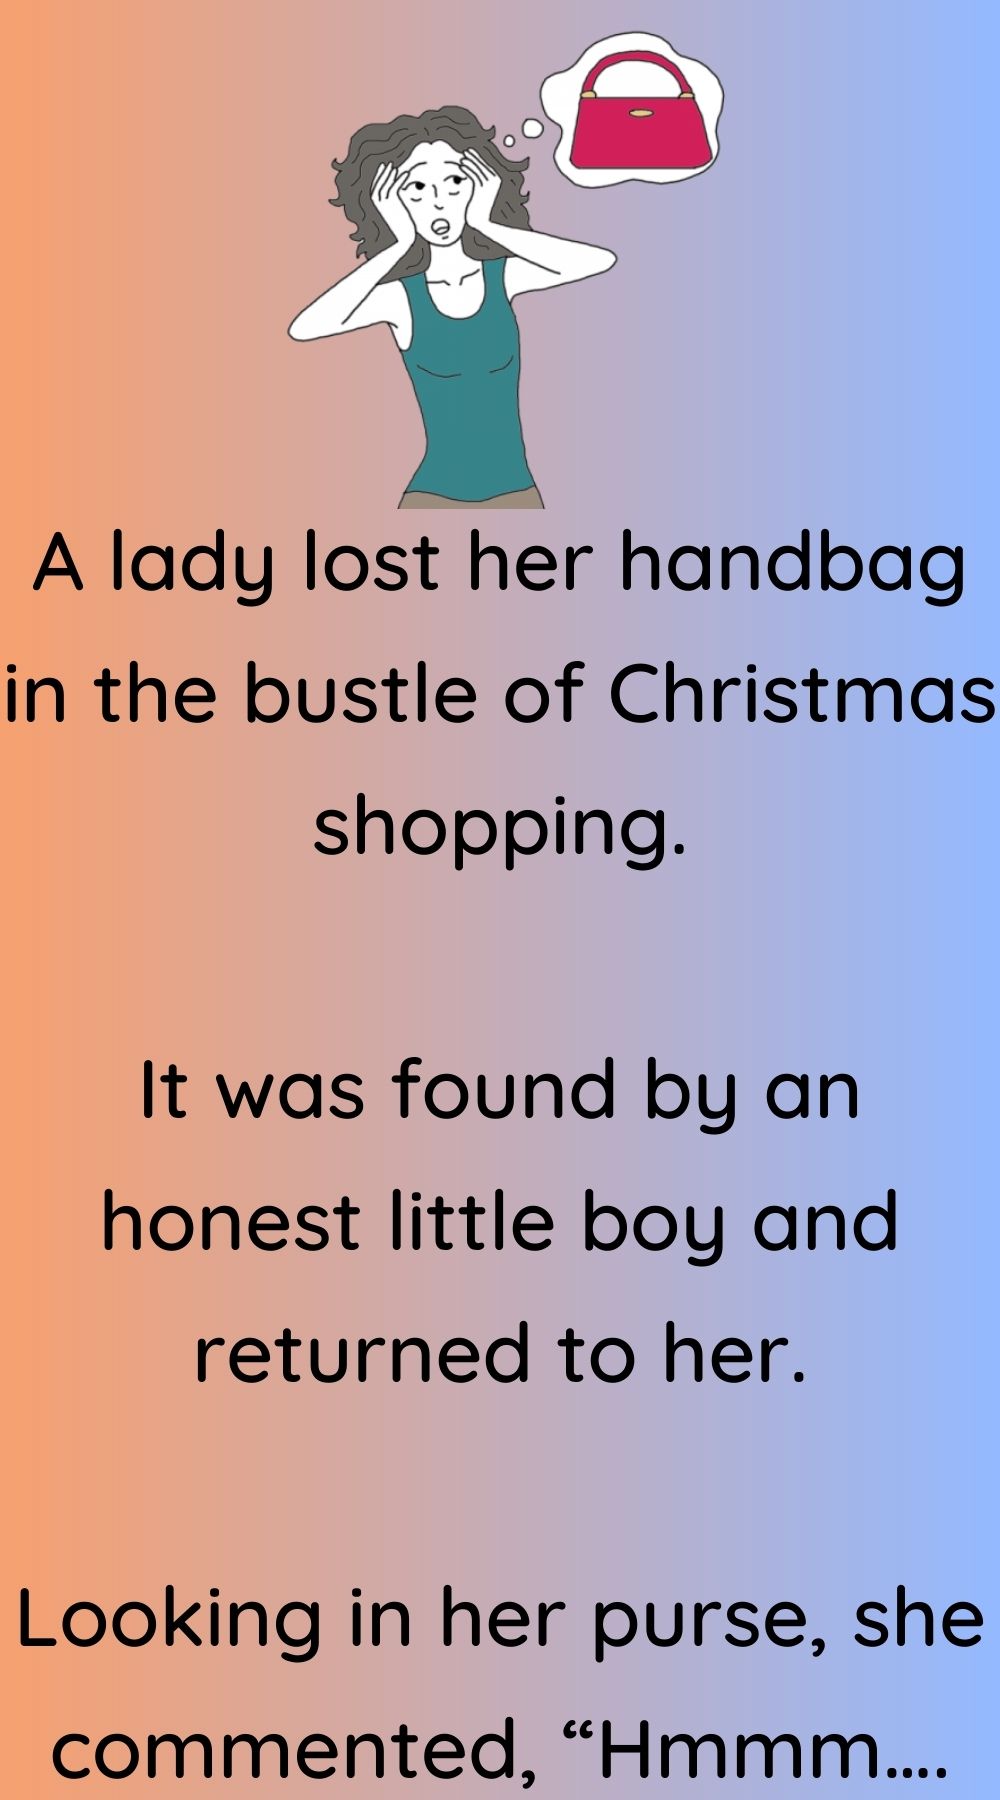 A lady lost her handbag